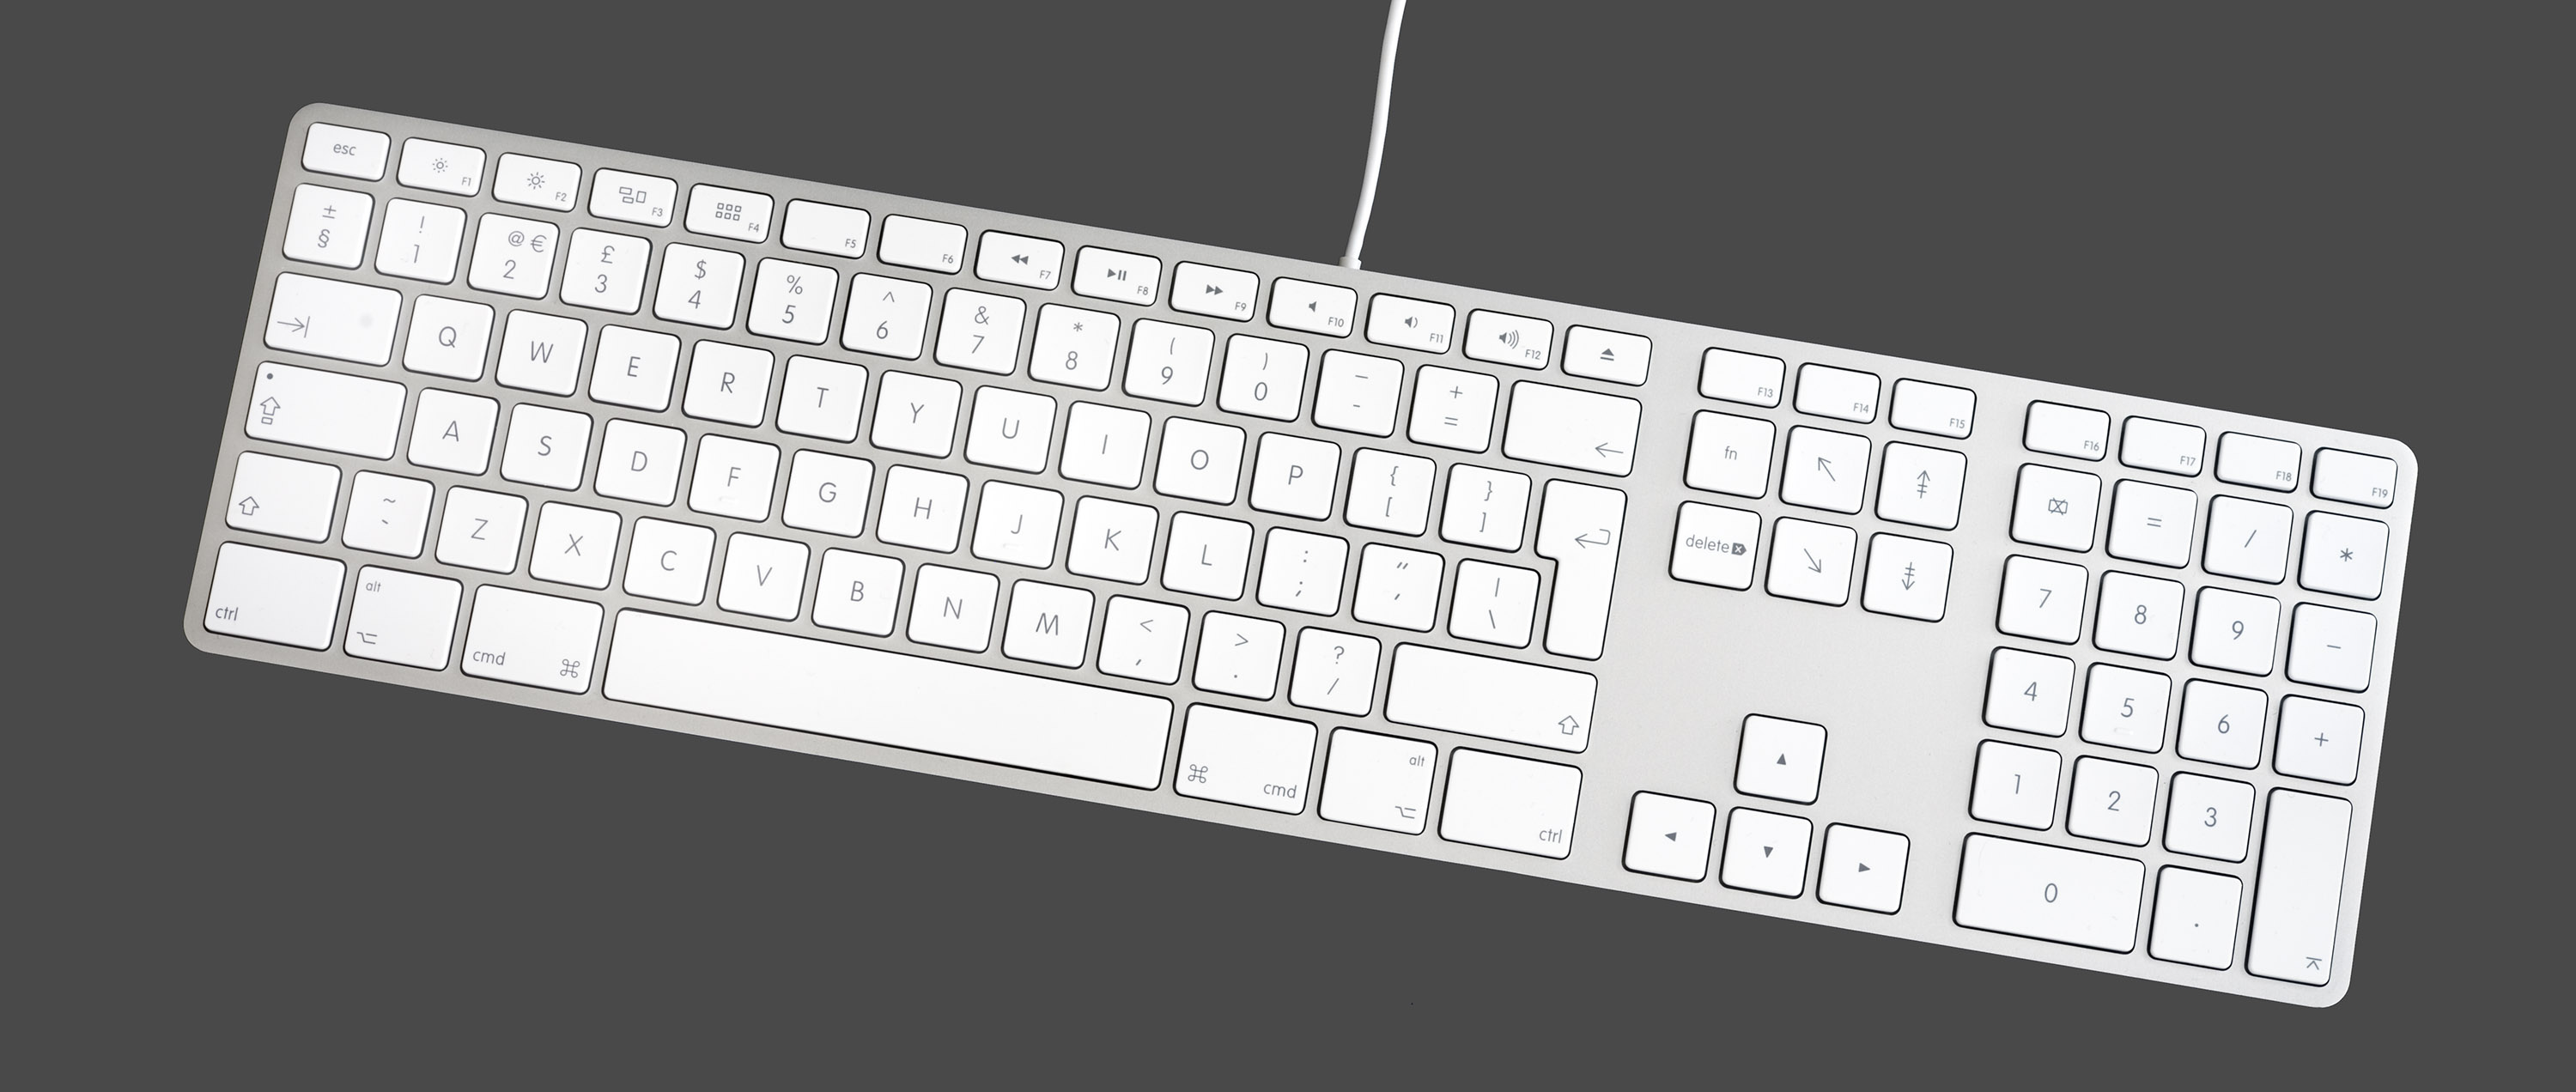 Usb Slim Keyboard For Mac